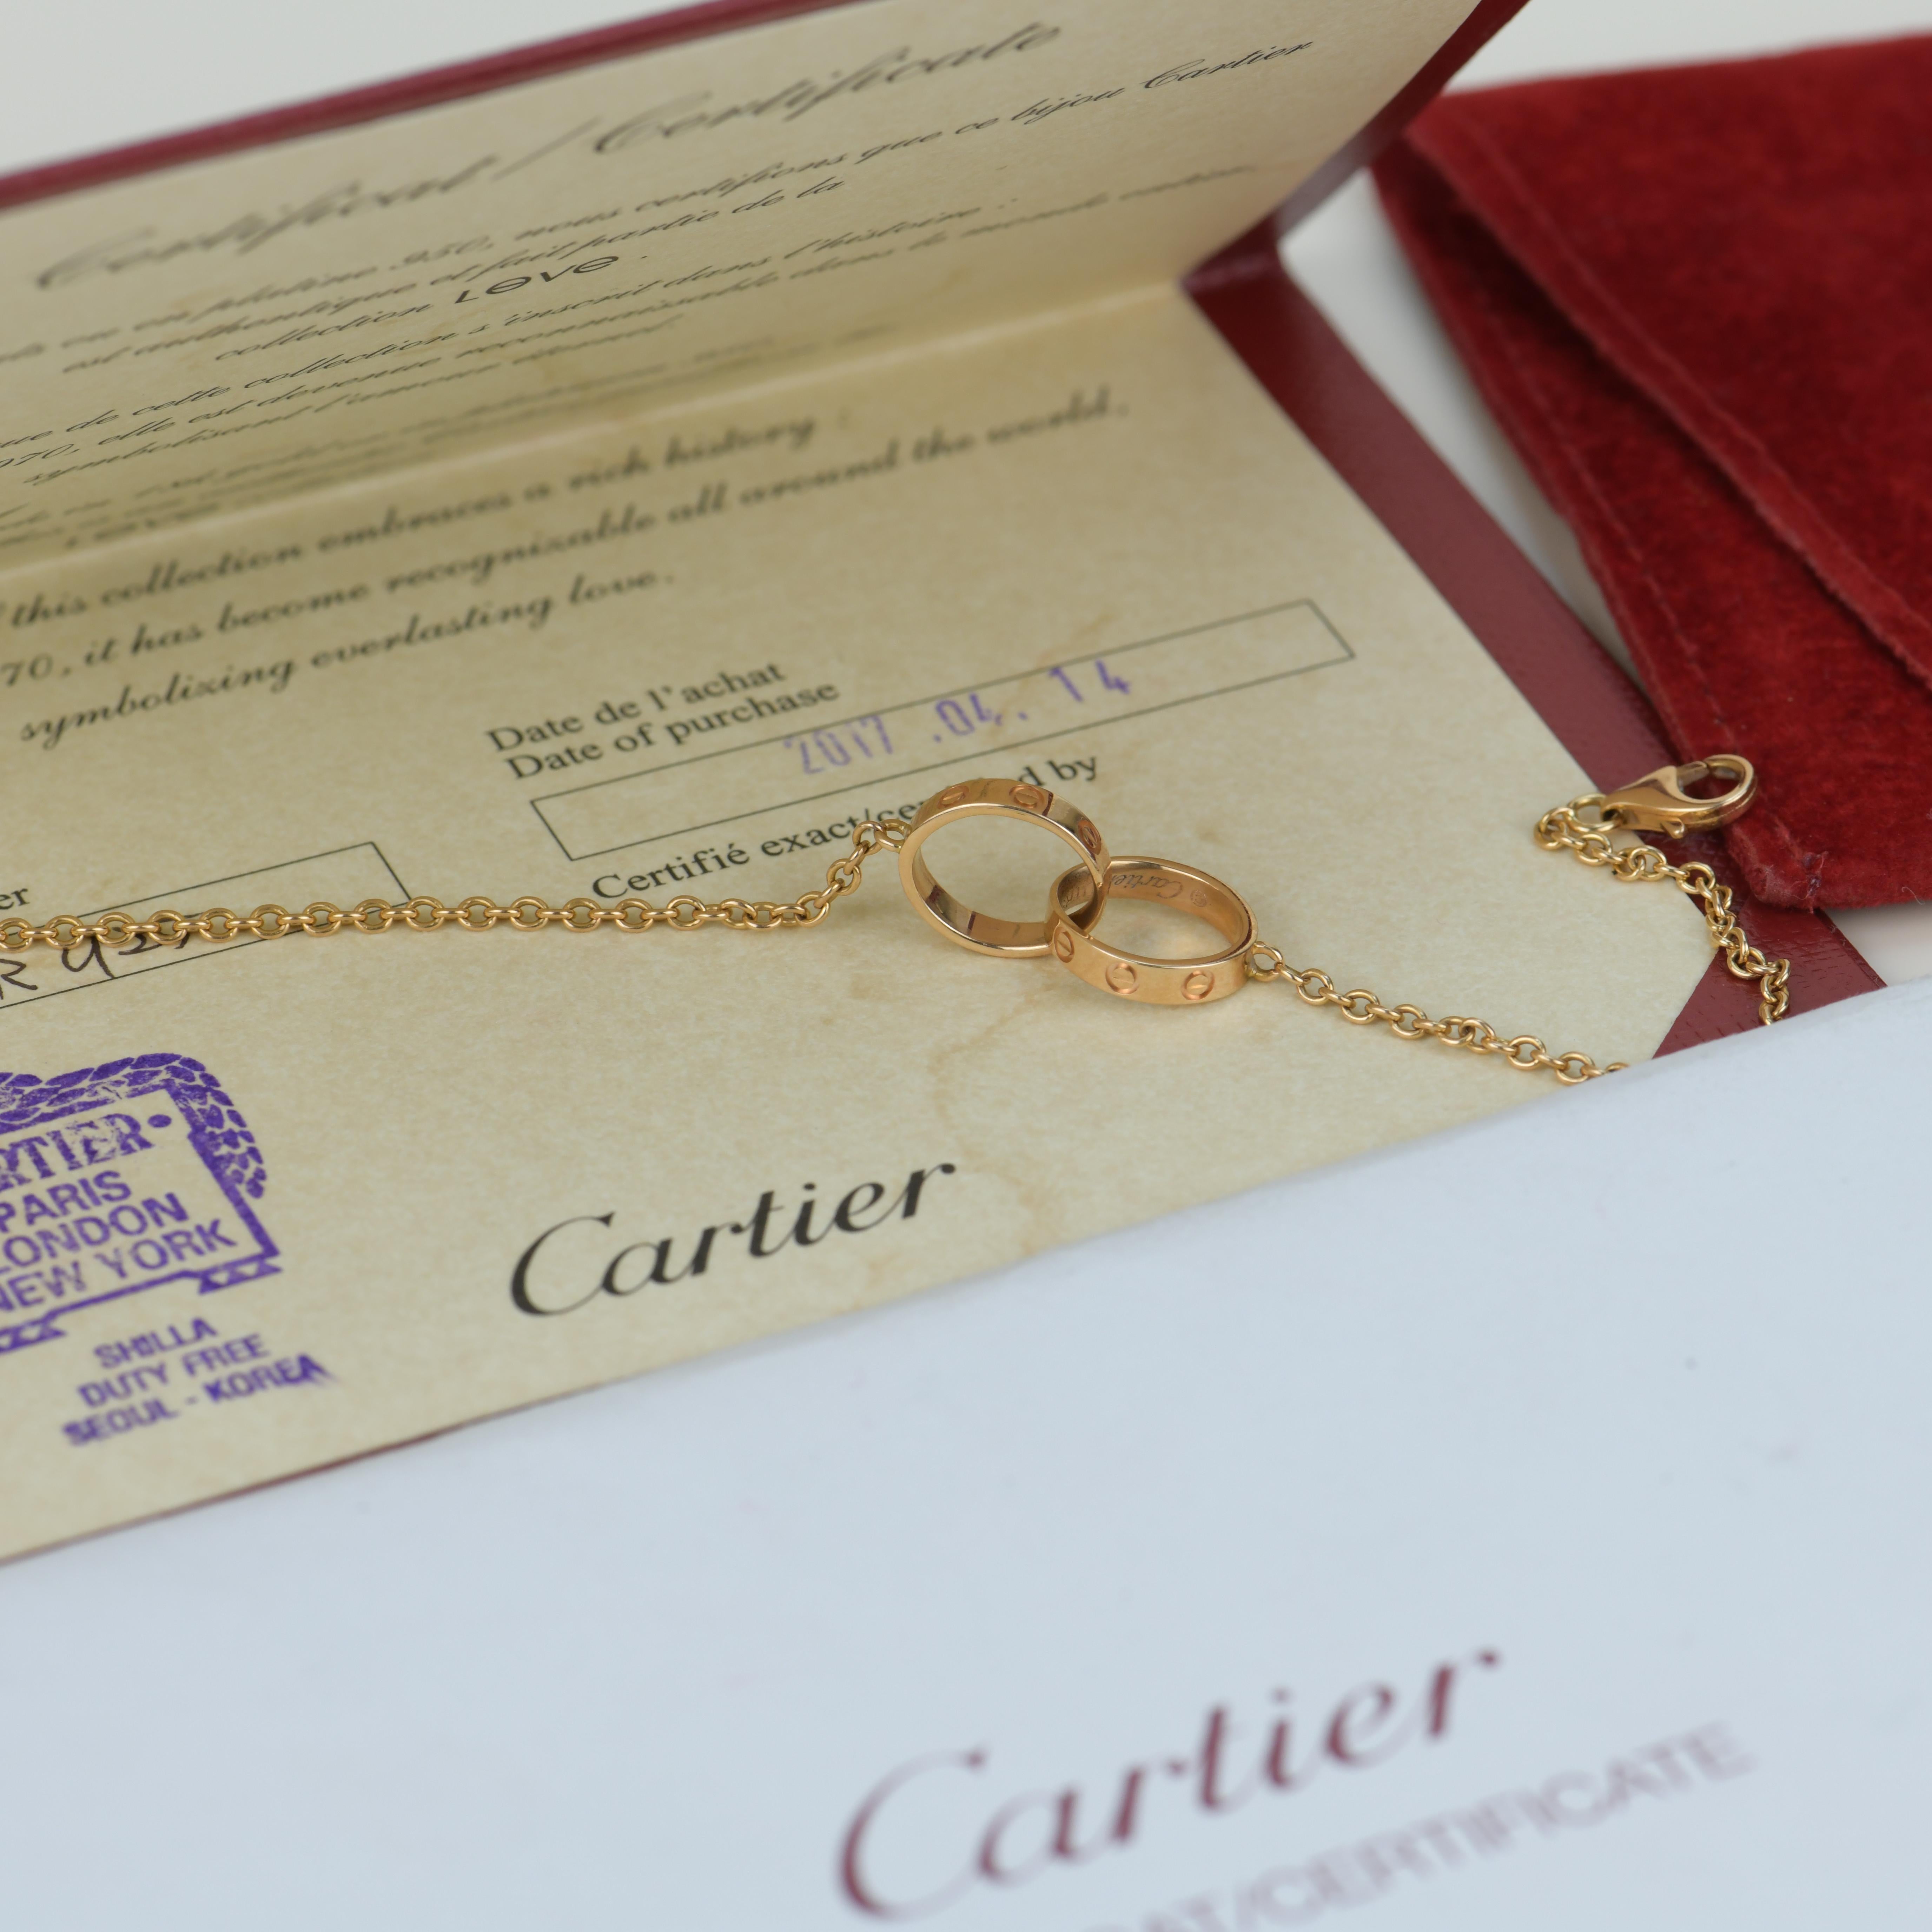 Brand	                                Cartier
Model	                                B6027000
Serial No.                                DT****
Retail Price	                       £1,640 incl. VAT / $1,790 / €1930 incl. VAT
Date                       